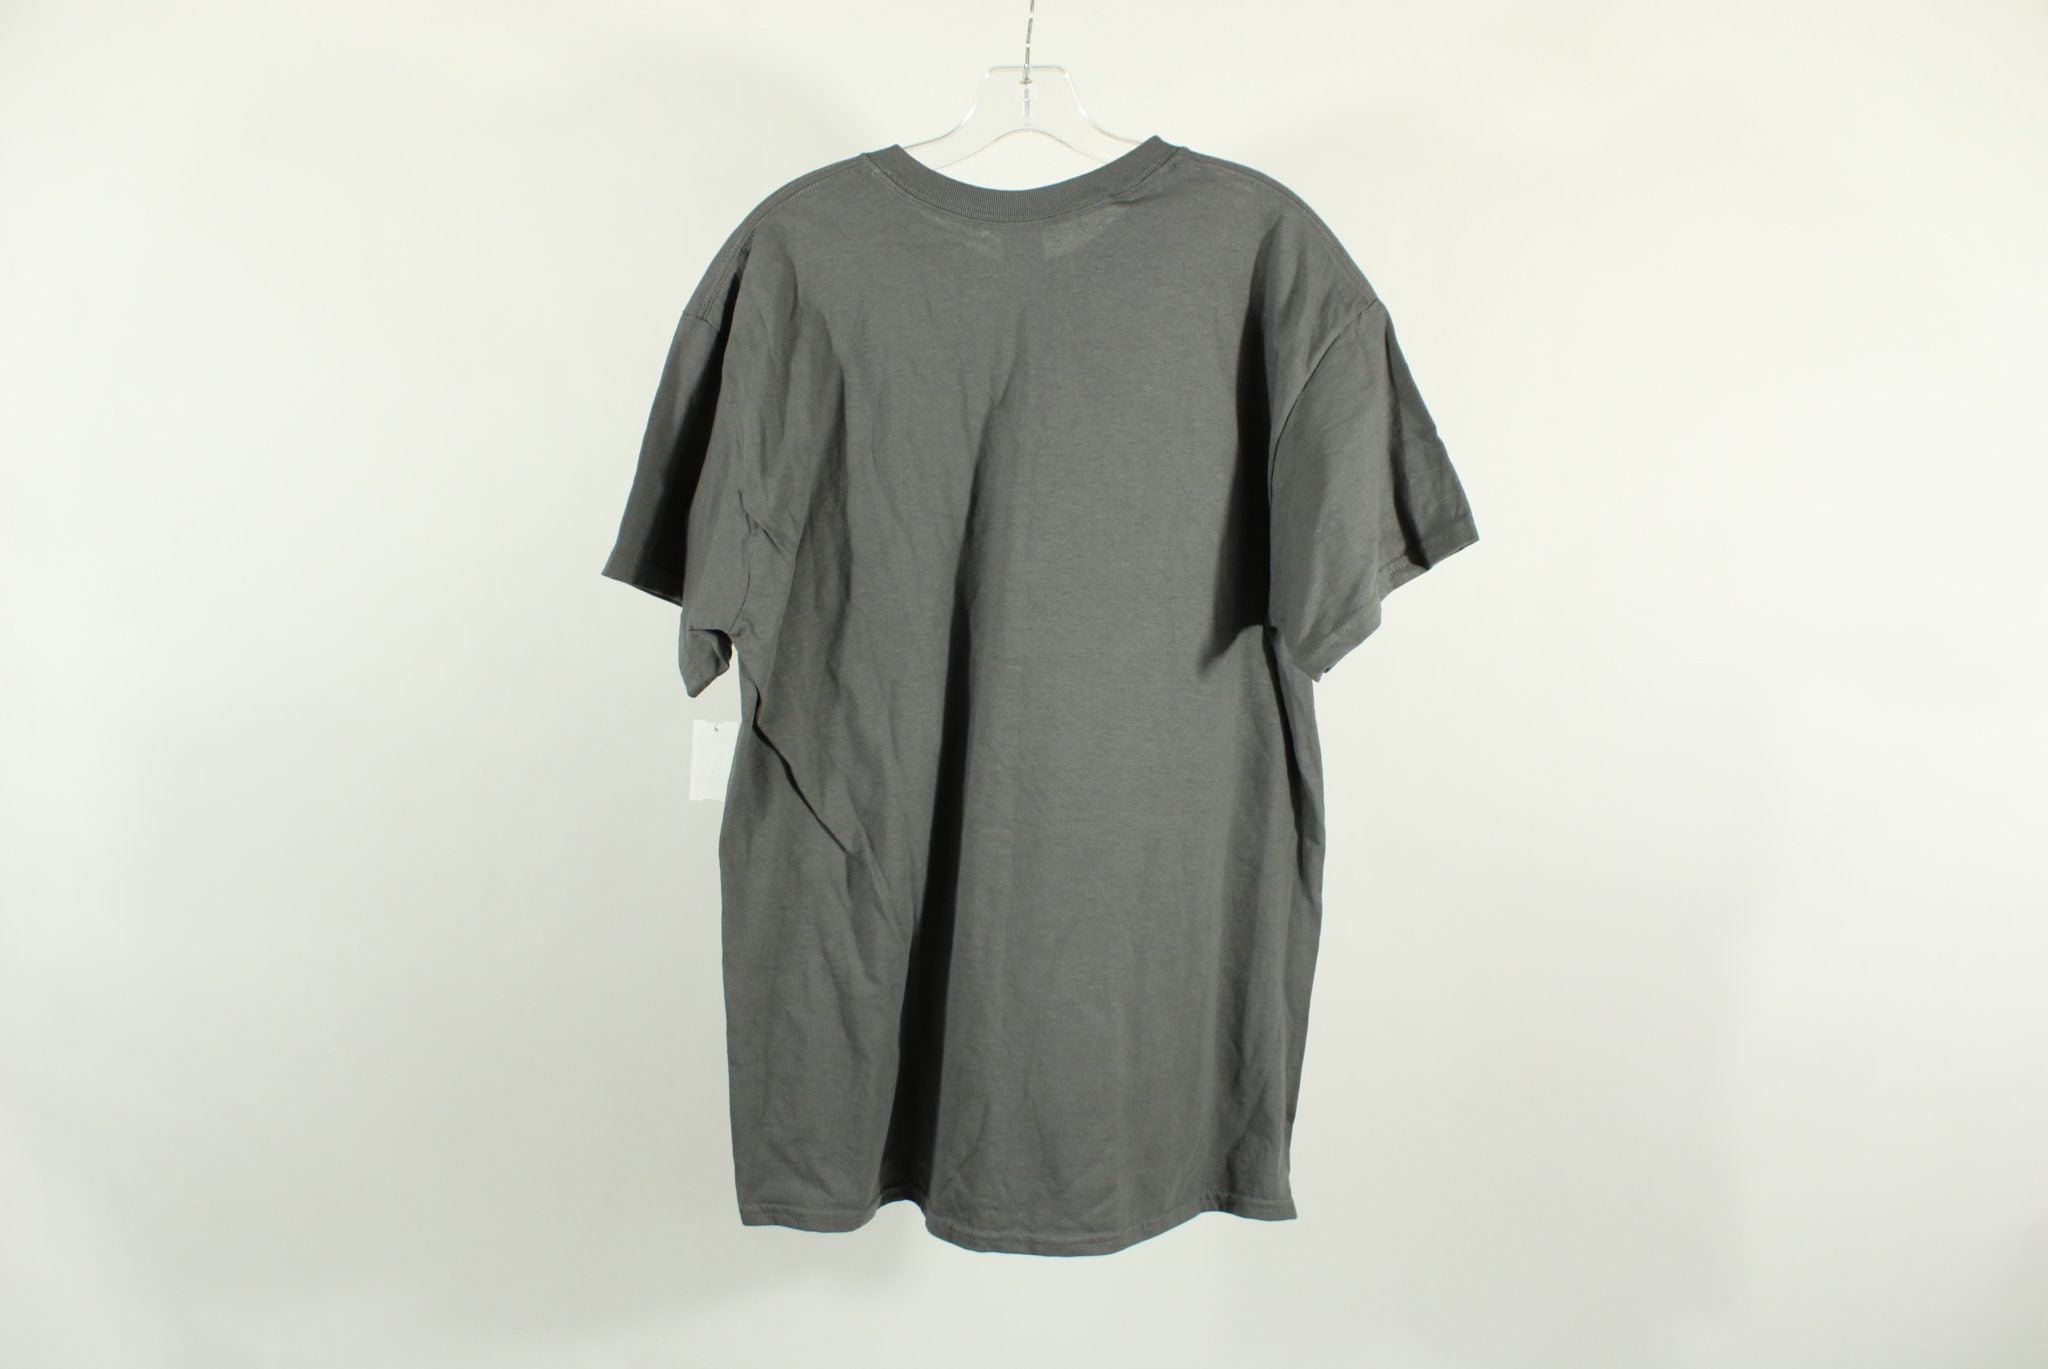 Gildan Gray Funny Engineer T-Shirt | Size L